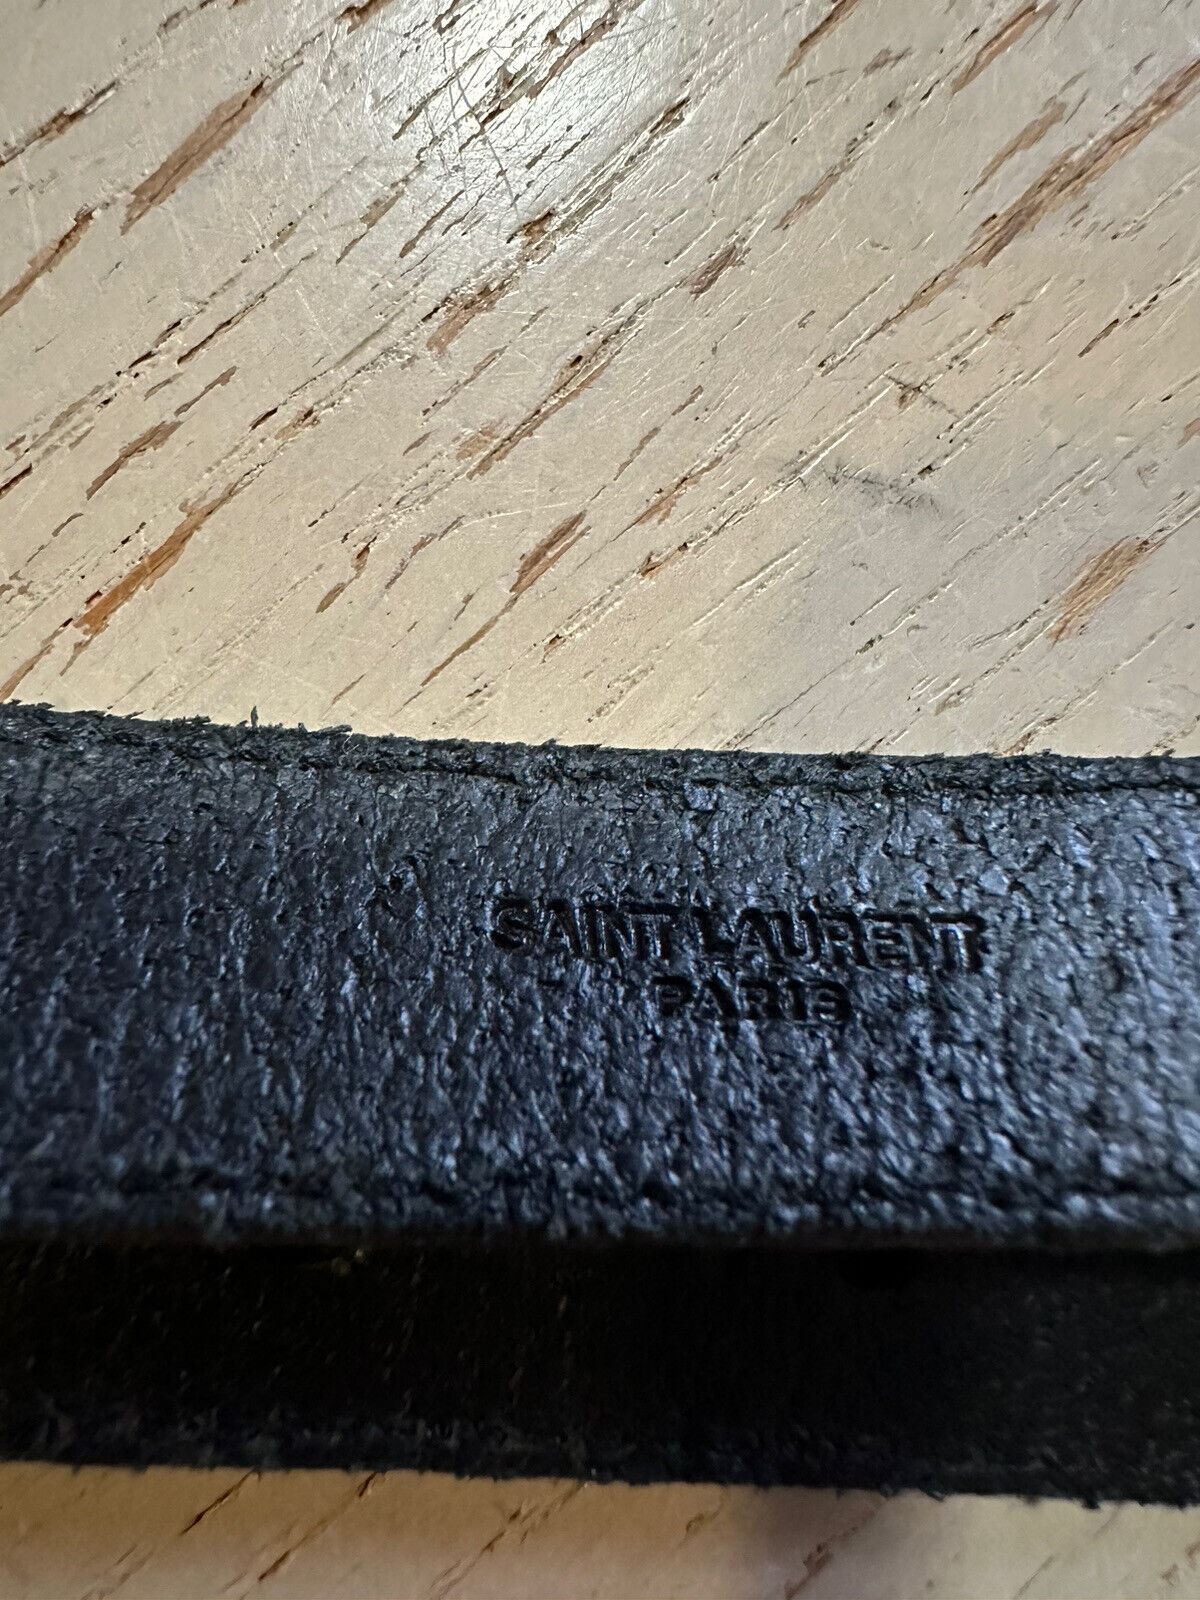 Neuer Saint Laurent Herren CINTURA PRINT Ledergürtel Schwarz 80/32